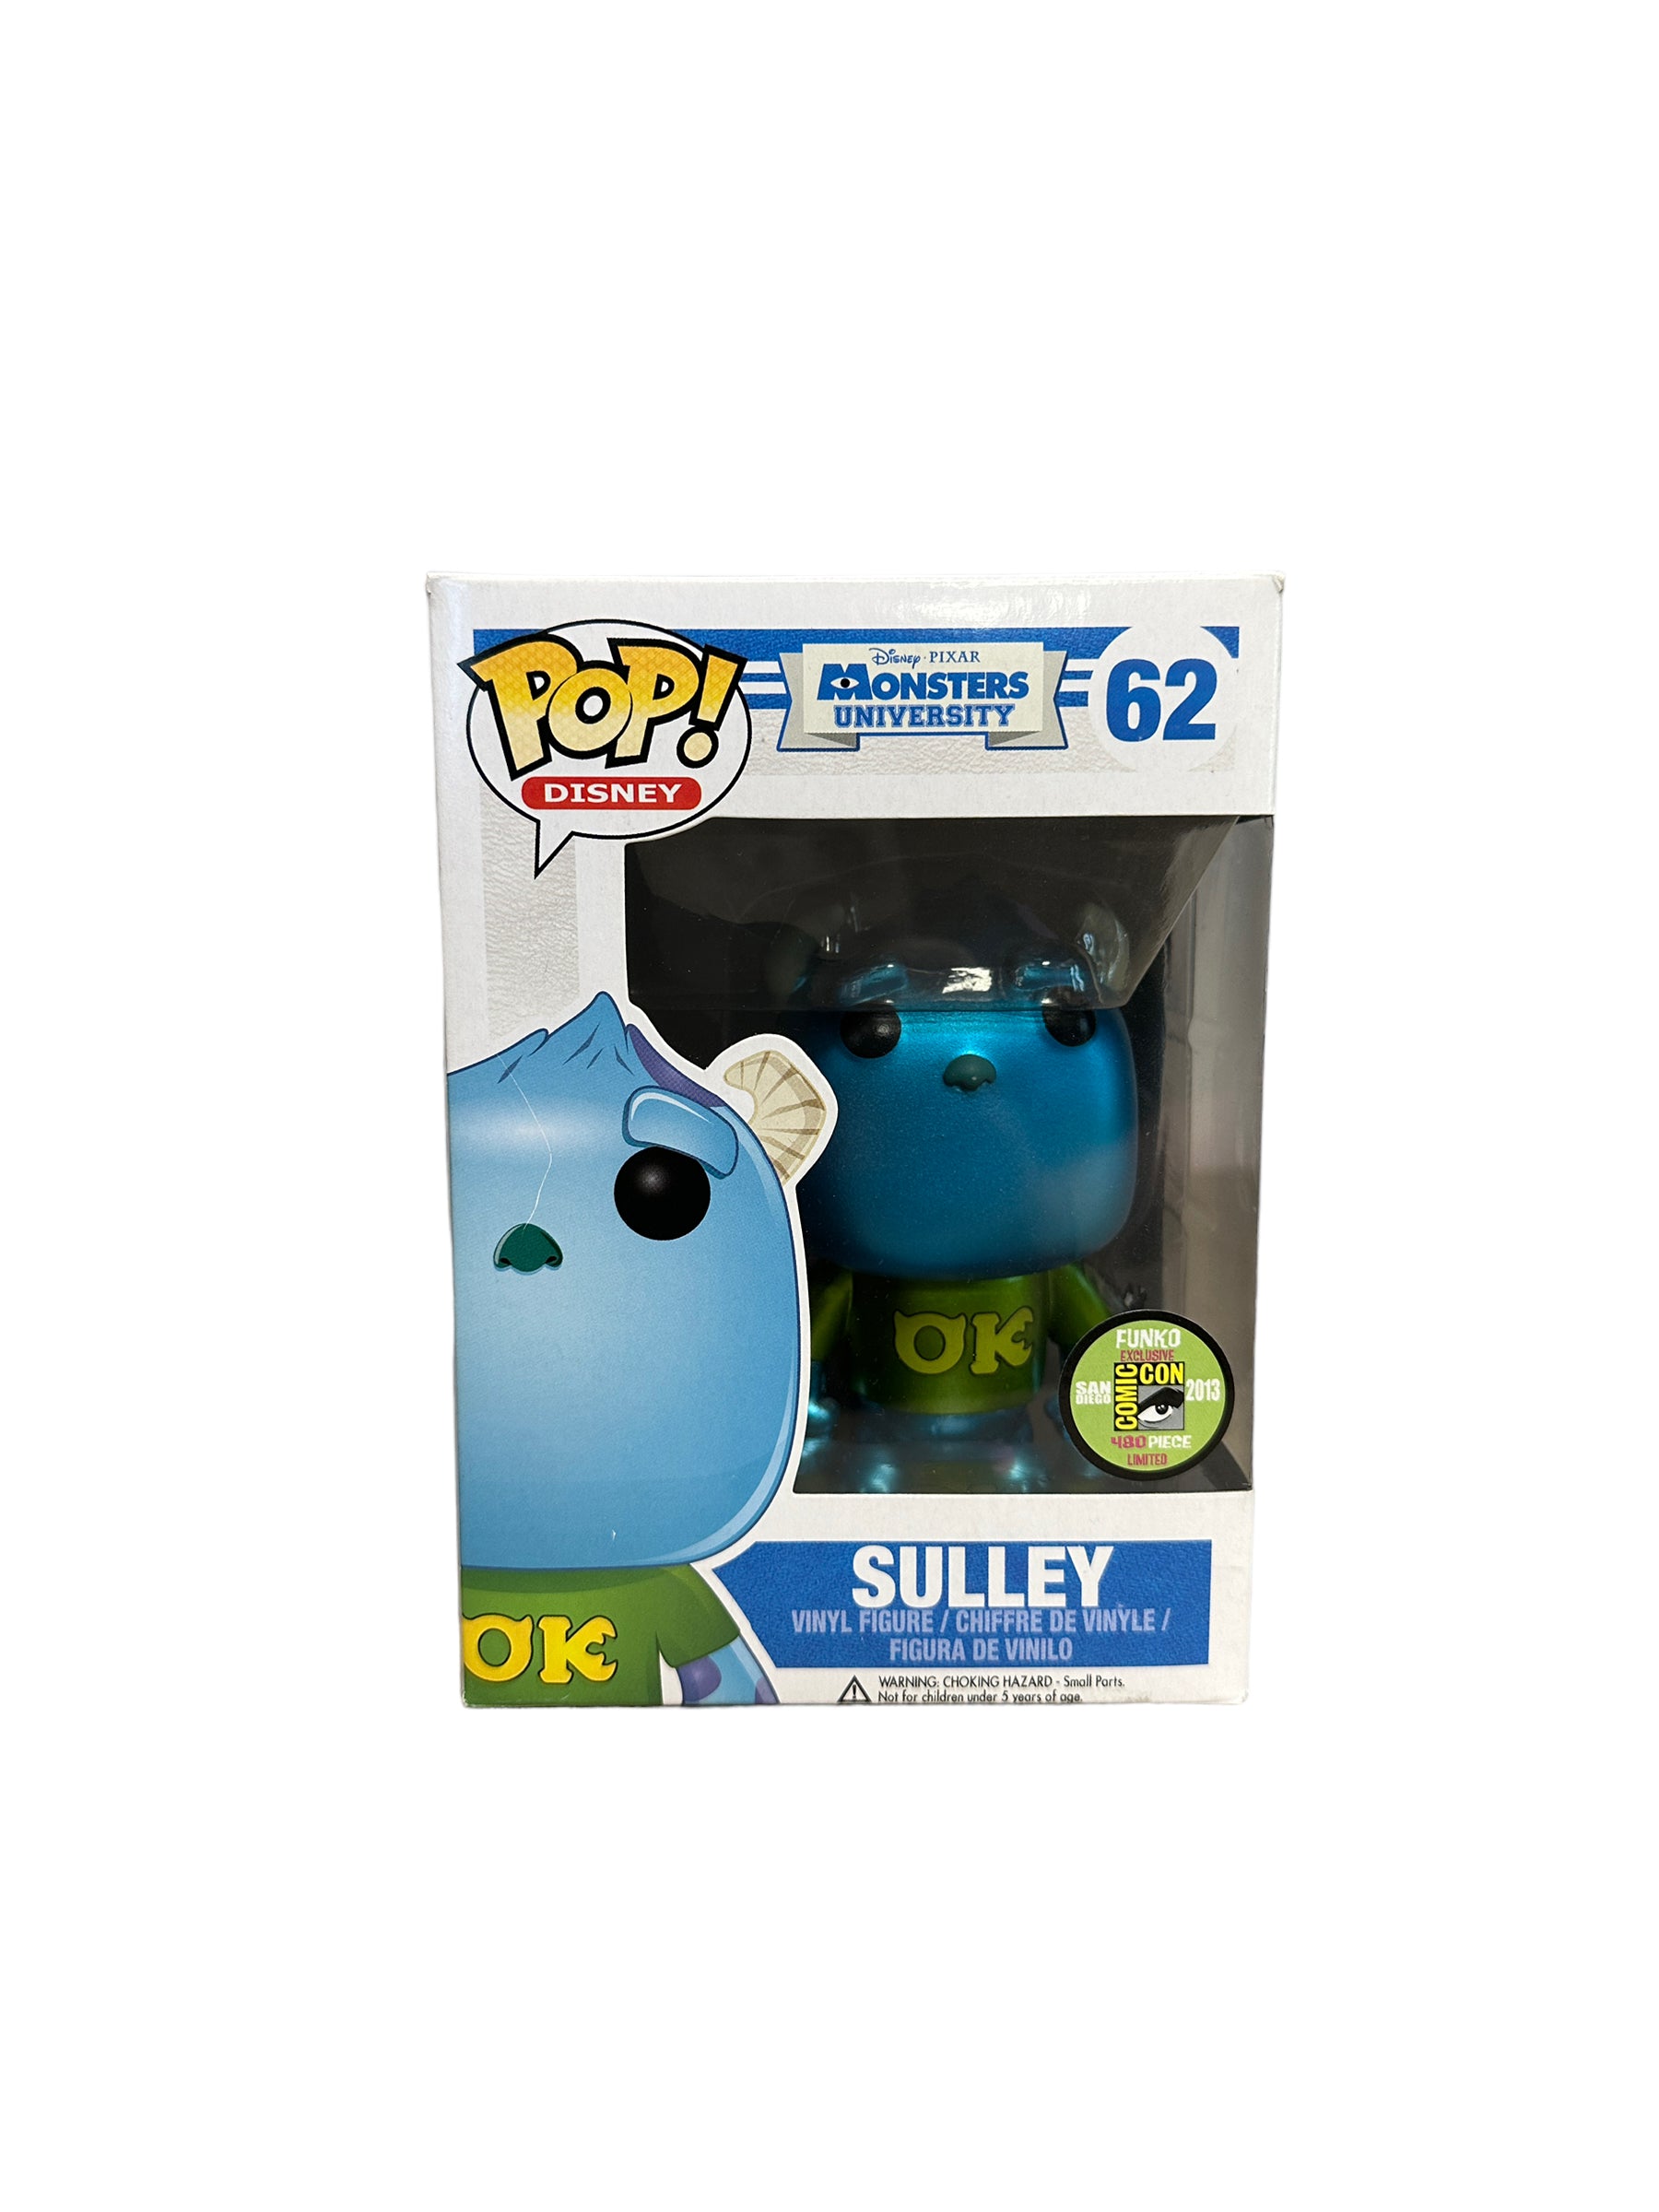 Sulley #62 (Metallic) Funko Pop! - Monsters University - SDCC 2013 Exclusive LE480 Pcs - Condition 8.5/10